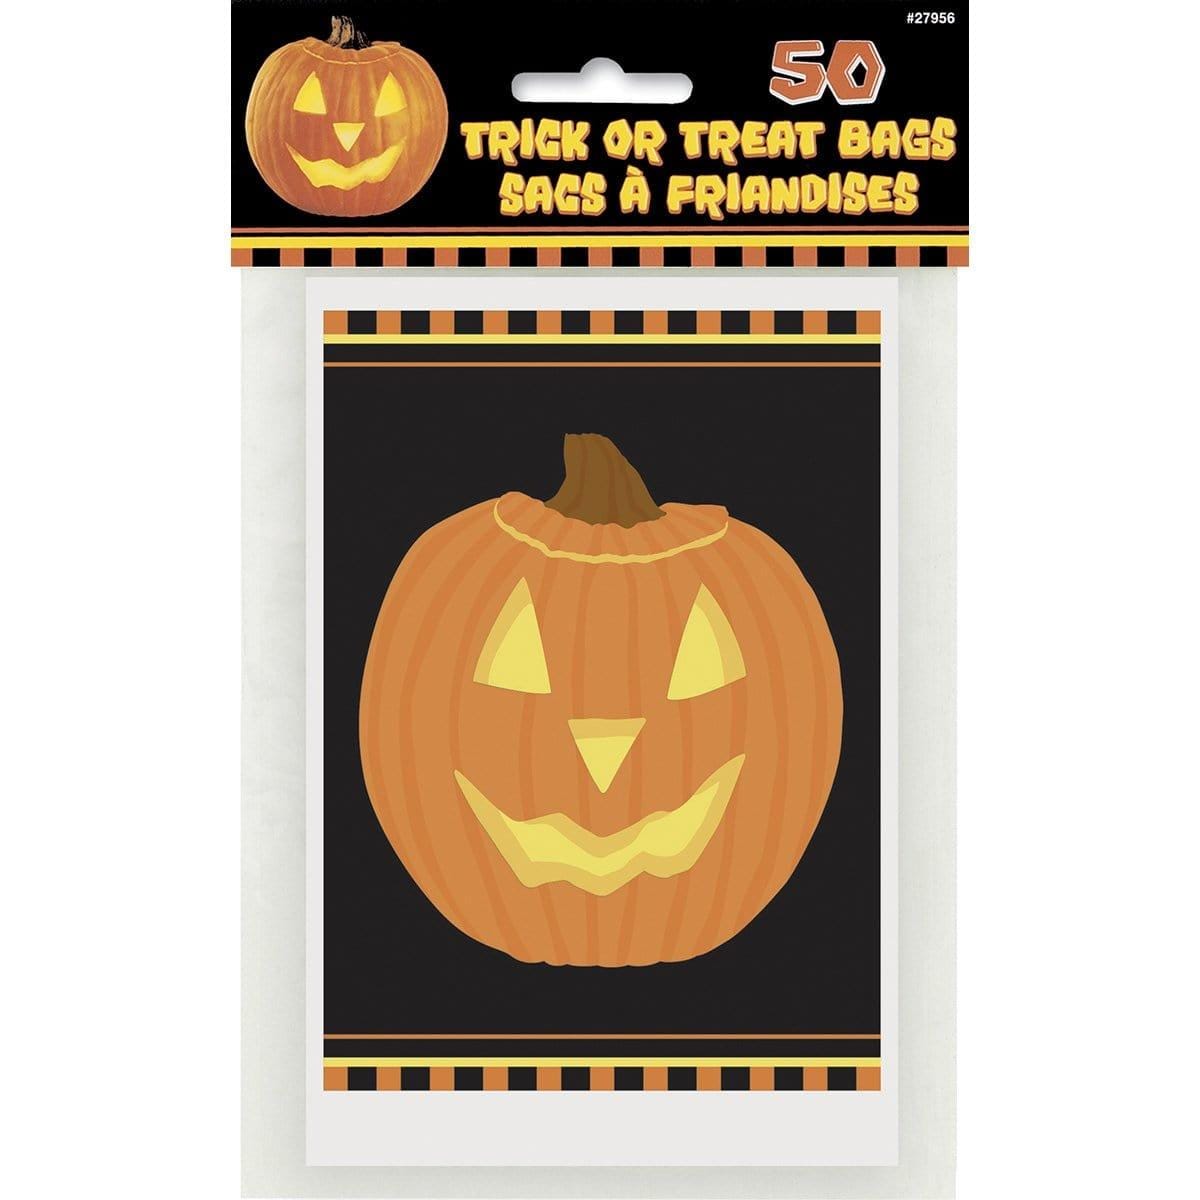 Buy Halloween Pumpkin favor bags, 50 per package sold at Party Expert